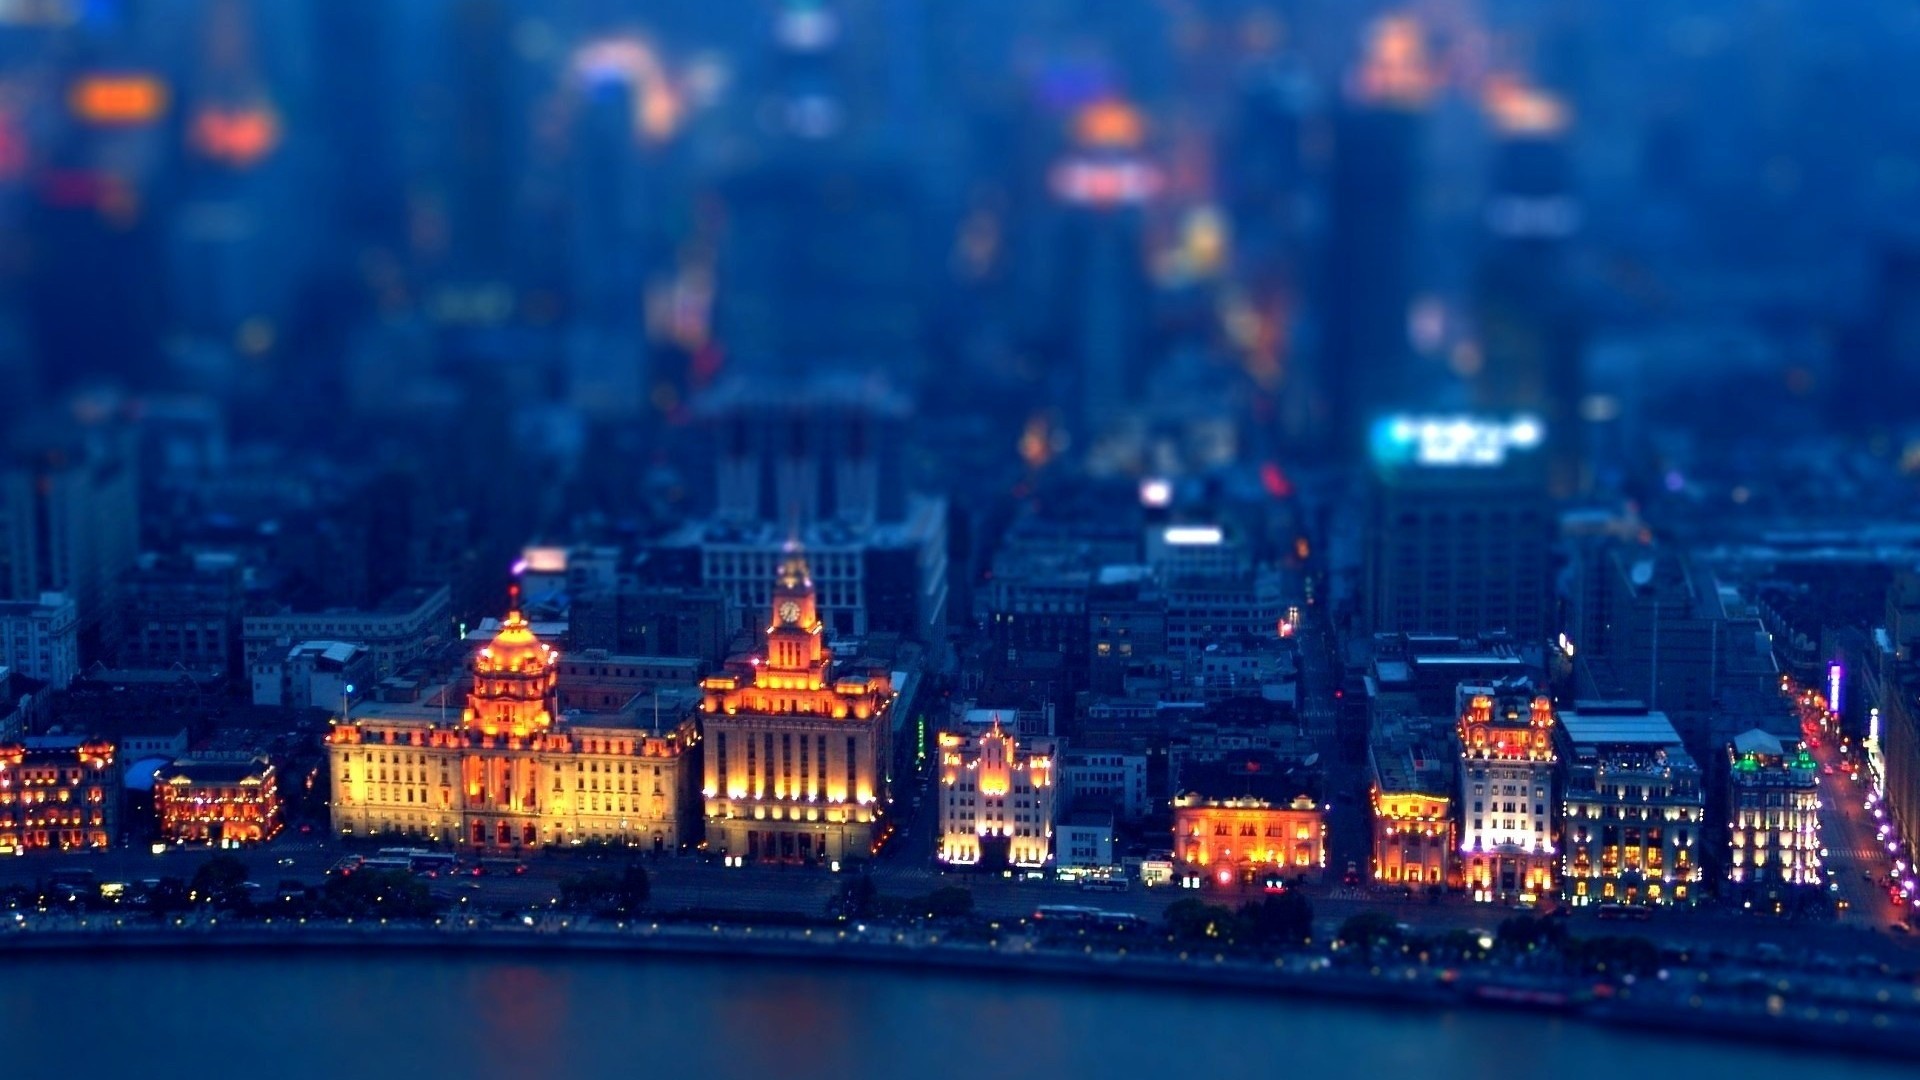 General 1920x1080 cityscape blurred lights building tilt shift Shanghai China Asia digital art